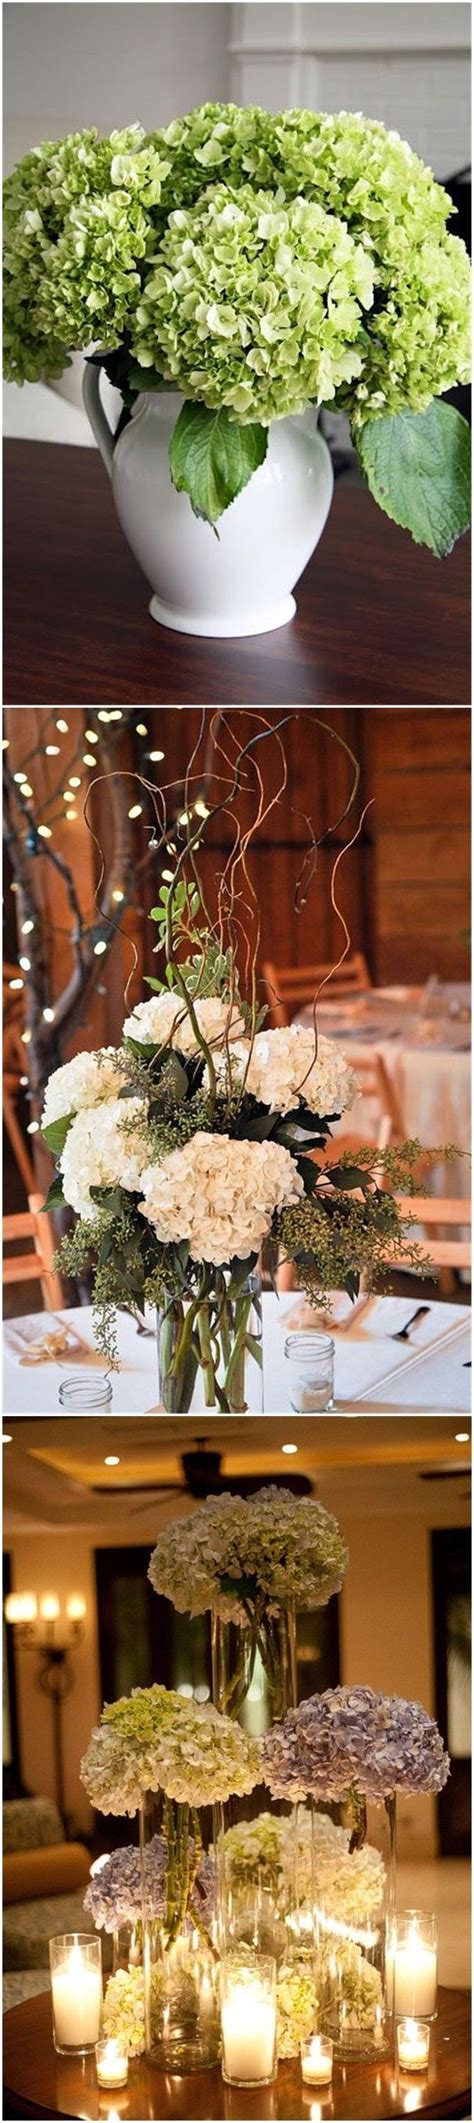 Diy hydrangea centerpiece + bouquet. 21 Simple Yet Rustic DIY Hydrangea Wedding Centerpieces Ideas | Wedding centerpieces diy rustic ...